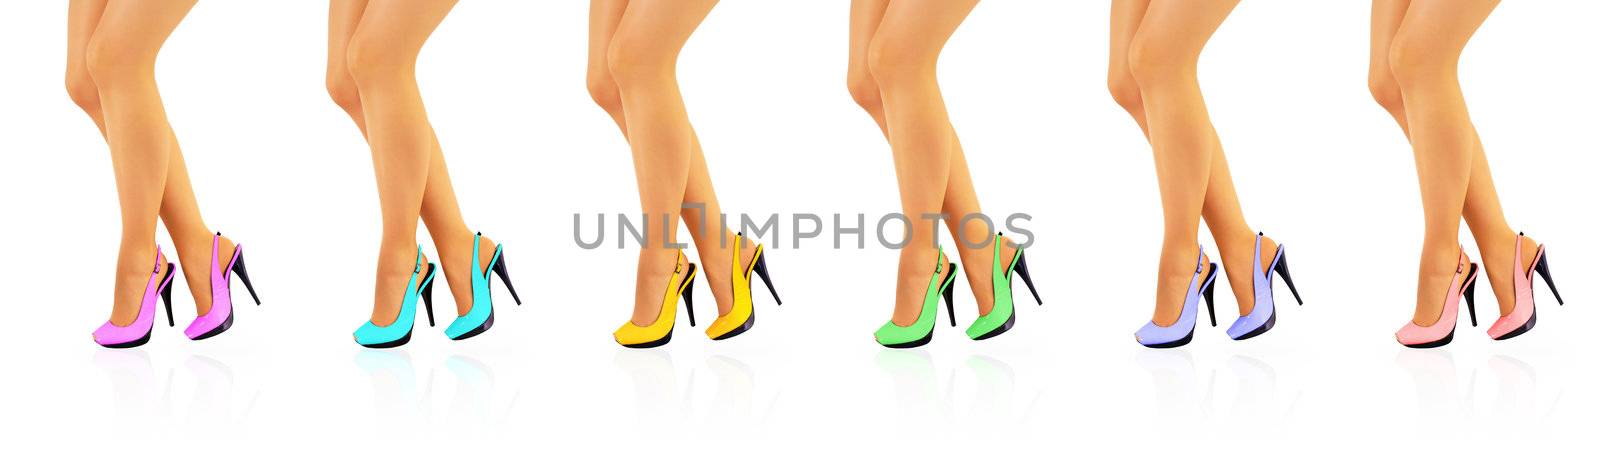 Beautiful women legs in color high heels by pzaxe